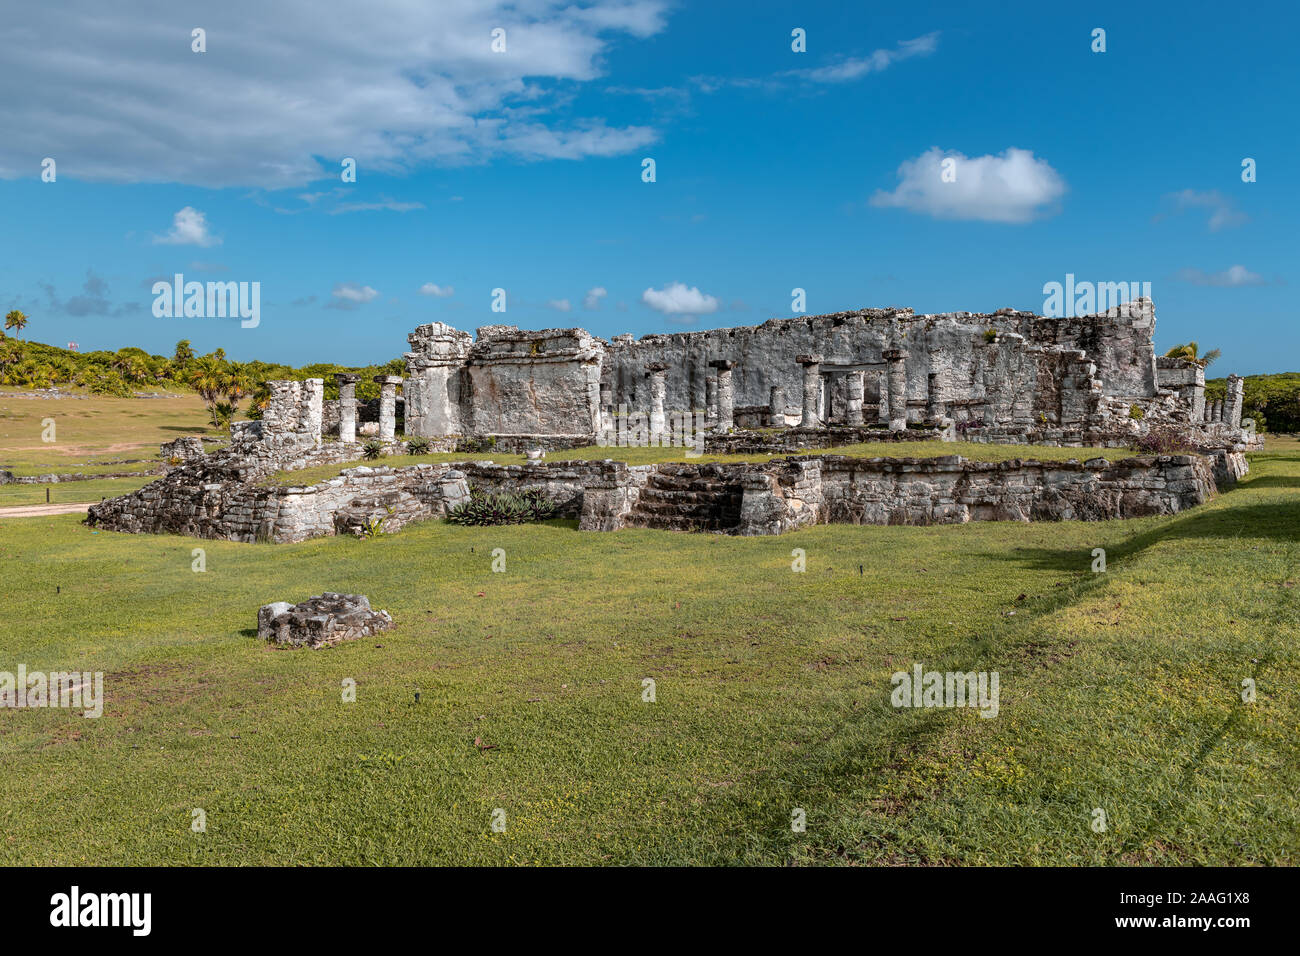 Mayan ruins in Tulum, Mexico Stock Photo